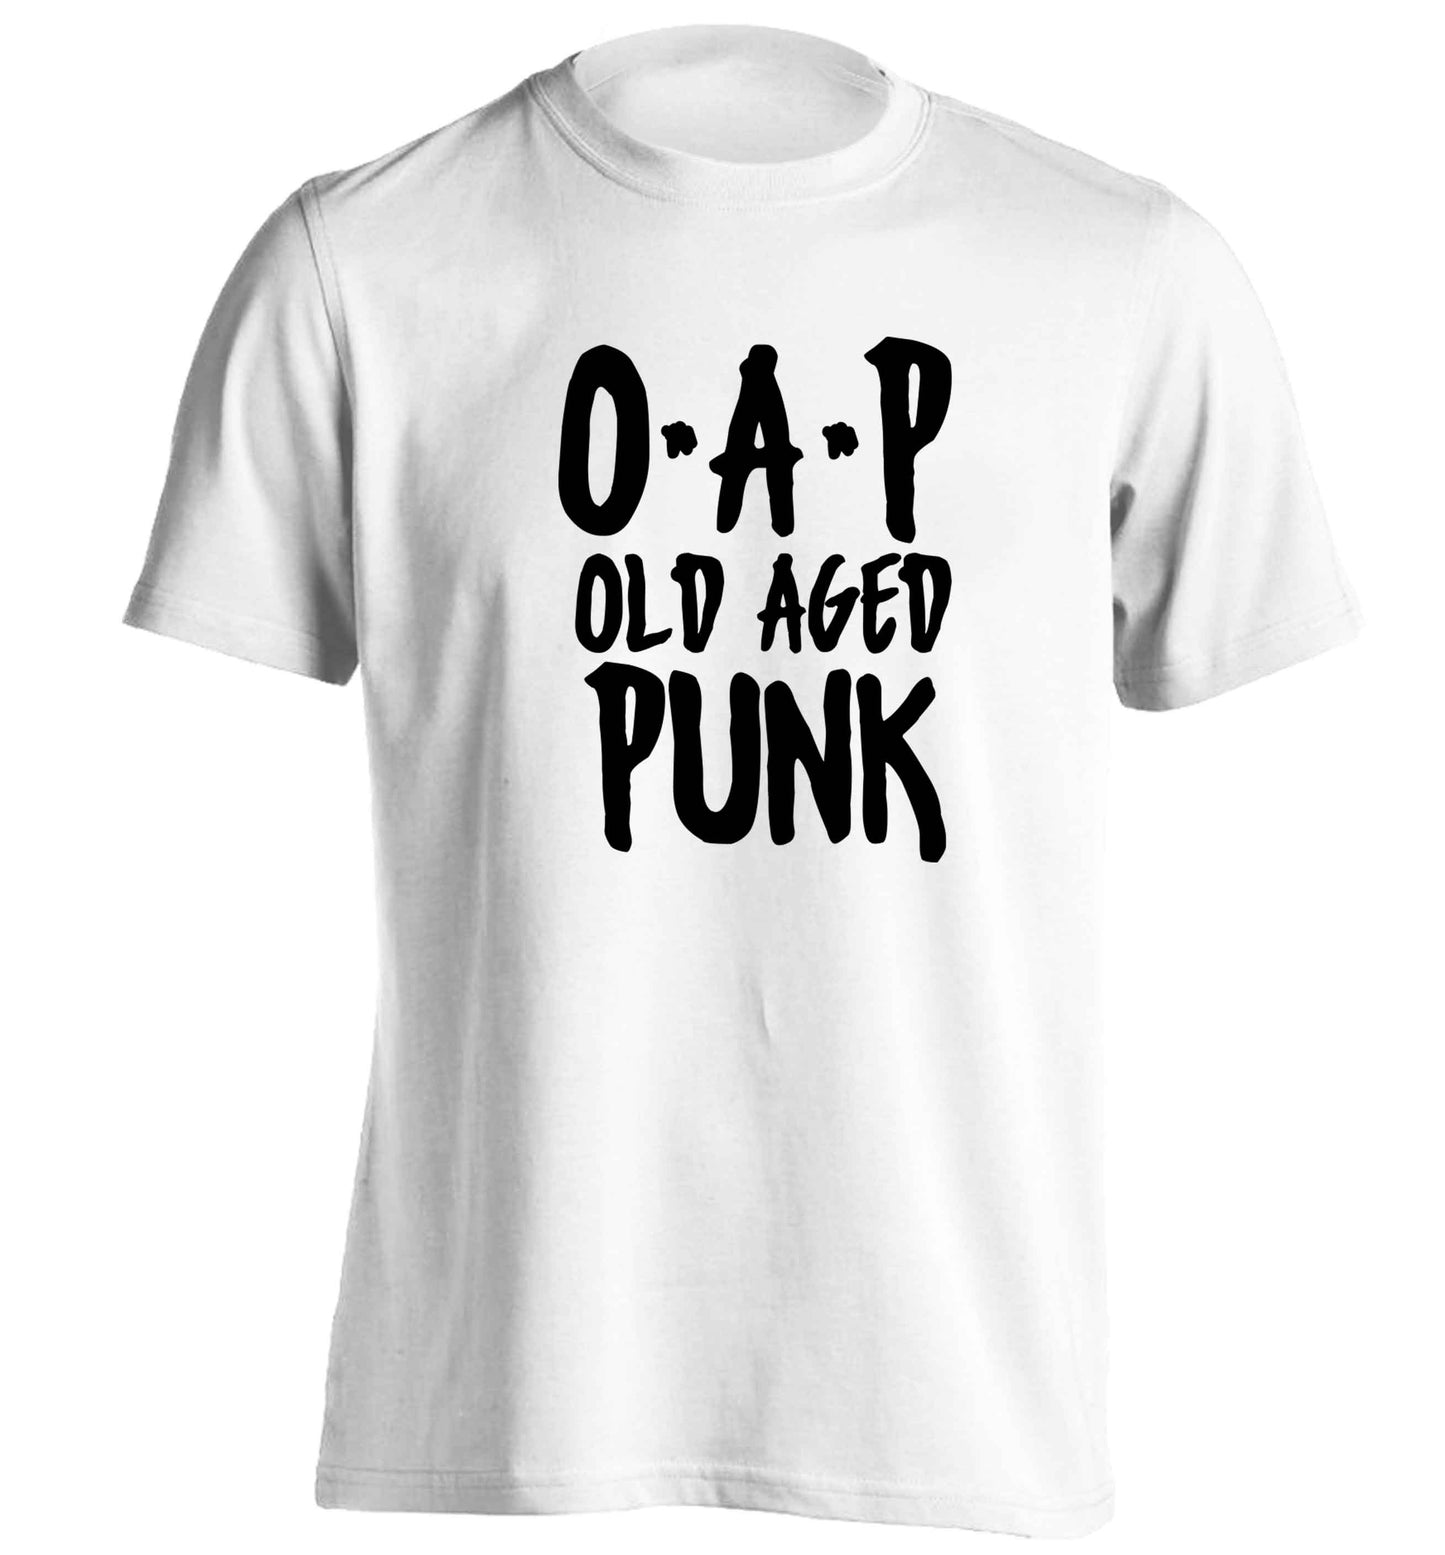 O.A.P Old Age Punk adults unisex white Tshirt 2XL